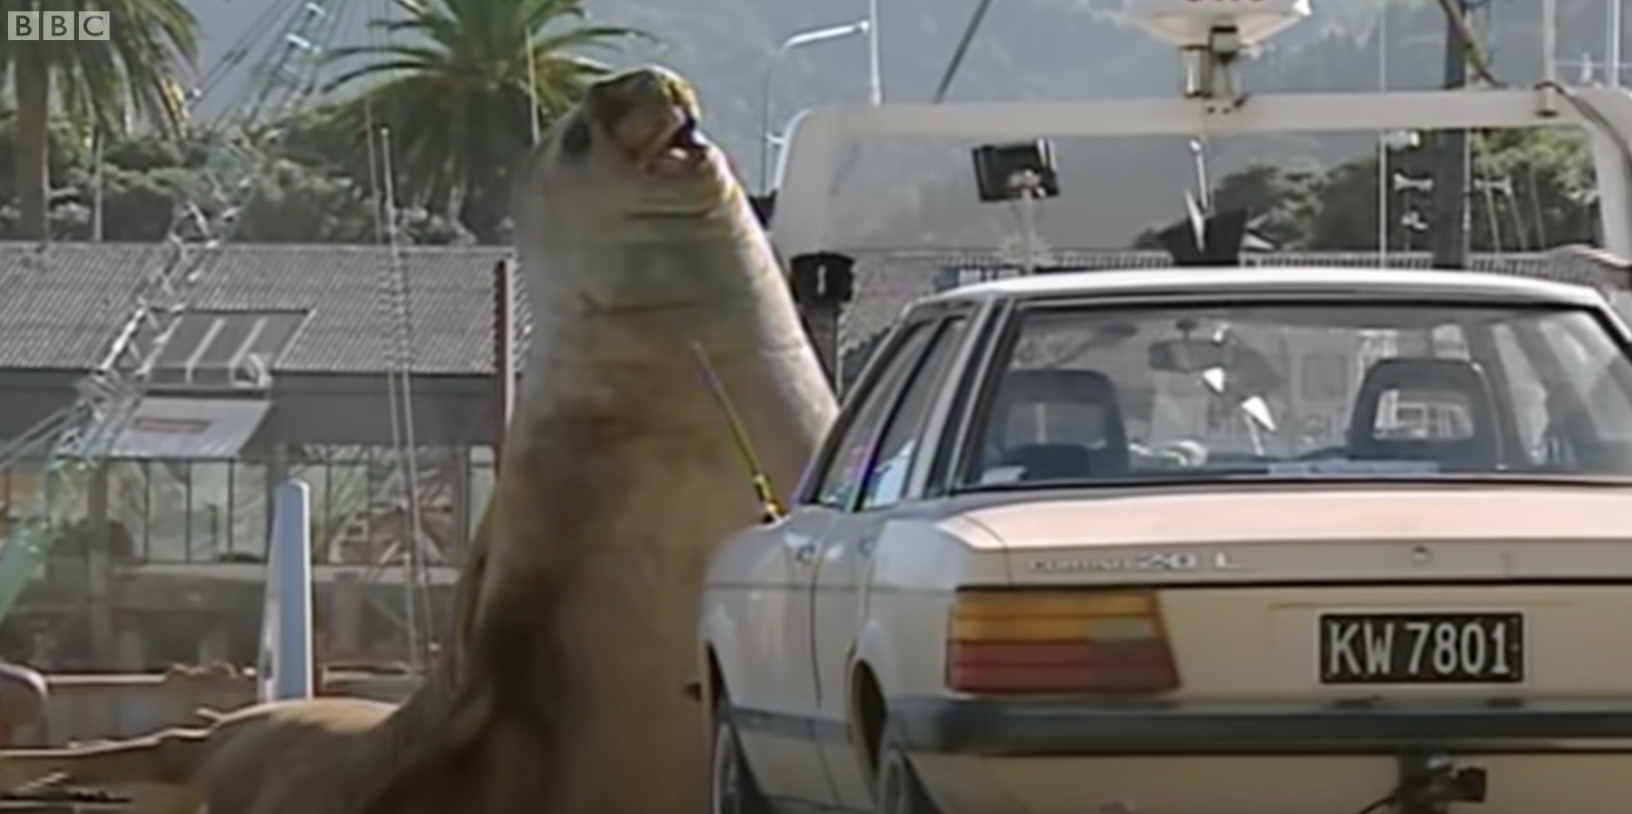 An elephant seal next to a car